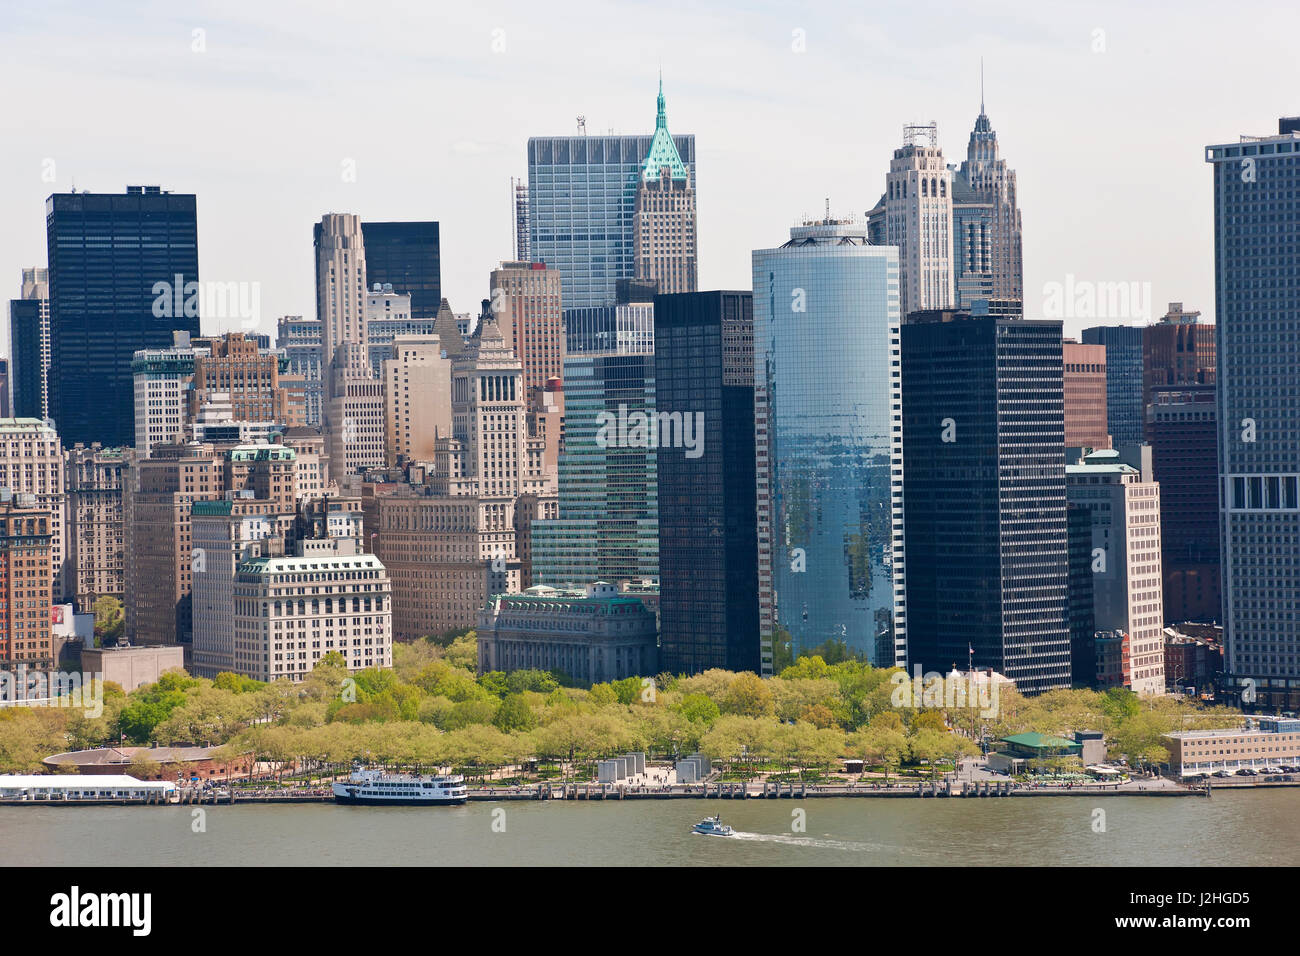 Cityscape of Lower Manhattan, New York, USA Stock Photo